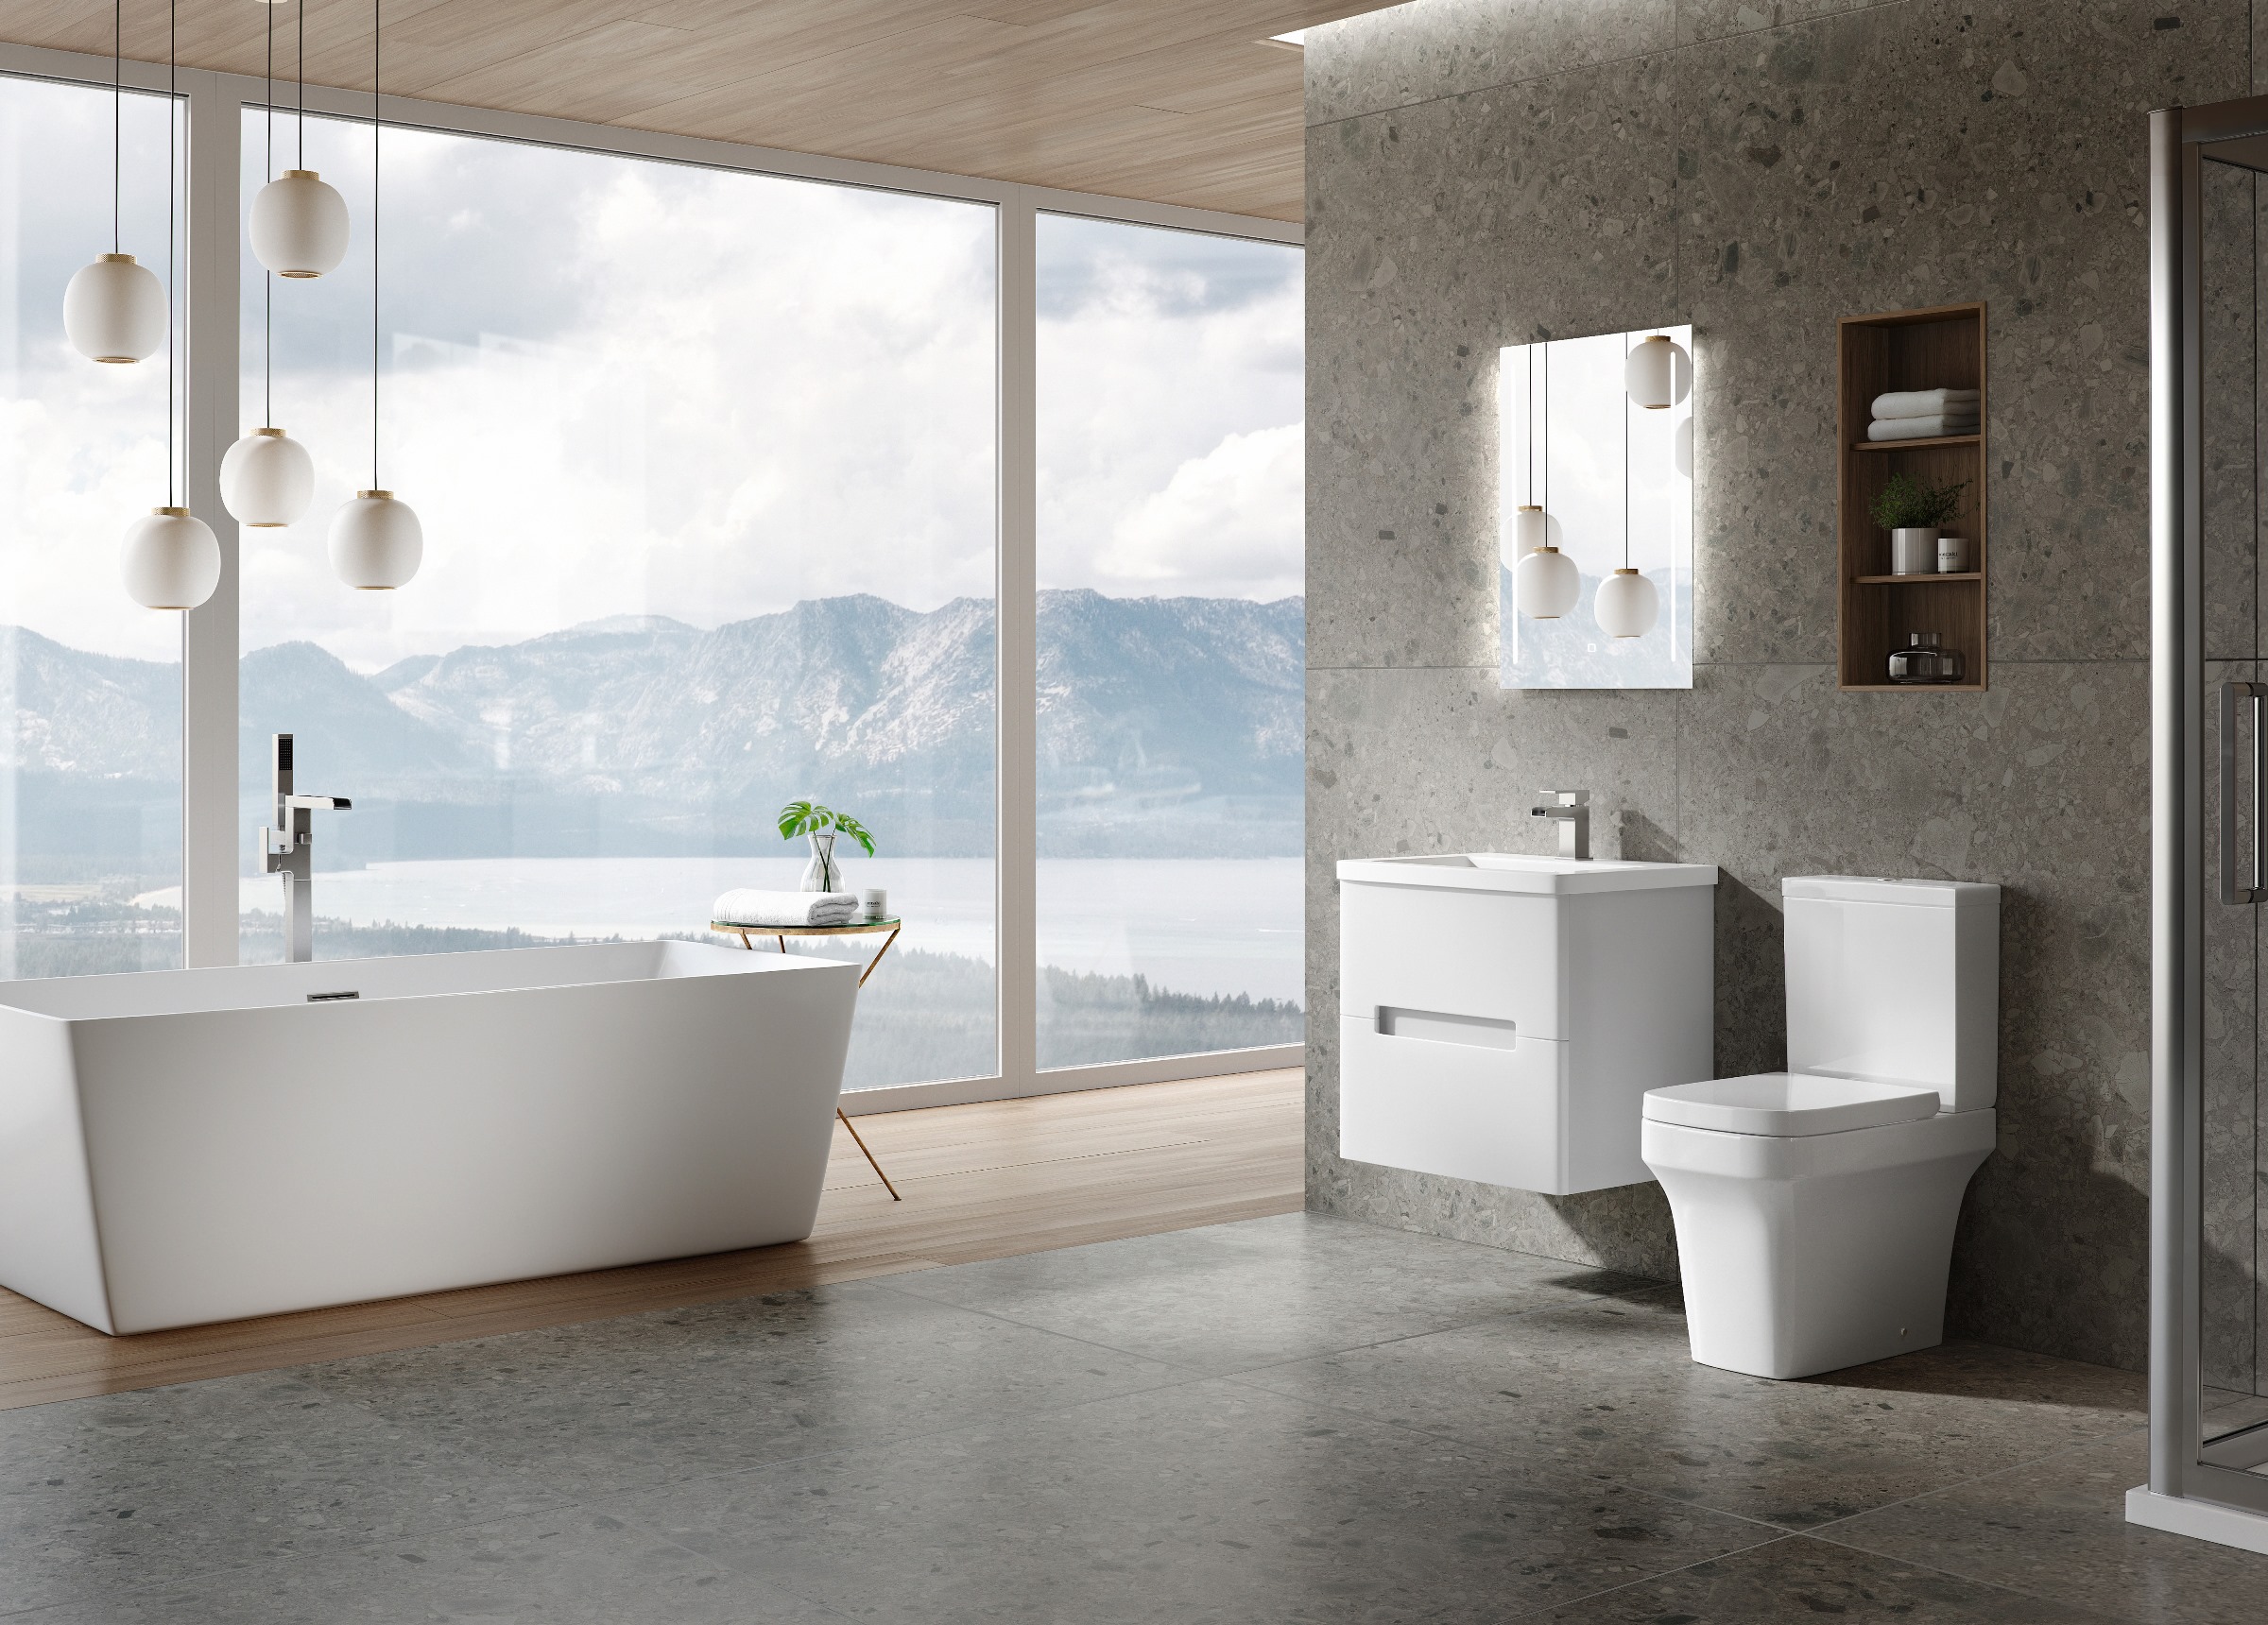 Aspirational design - a Highlife bathroom